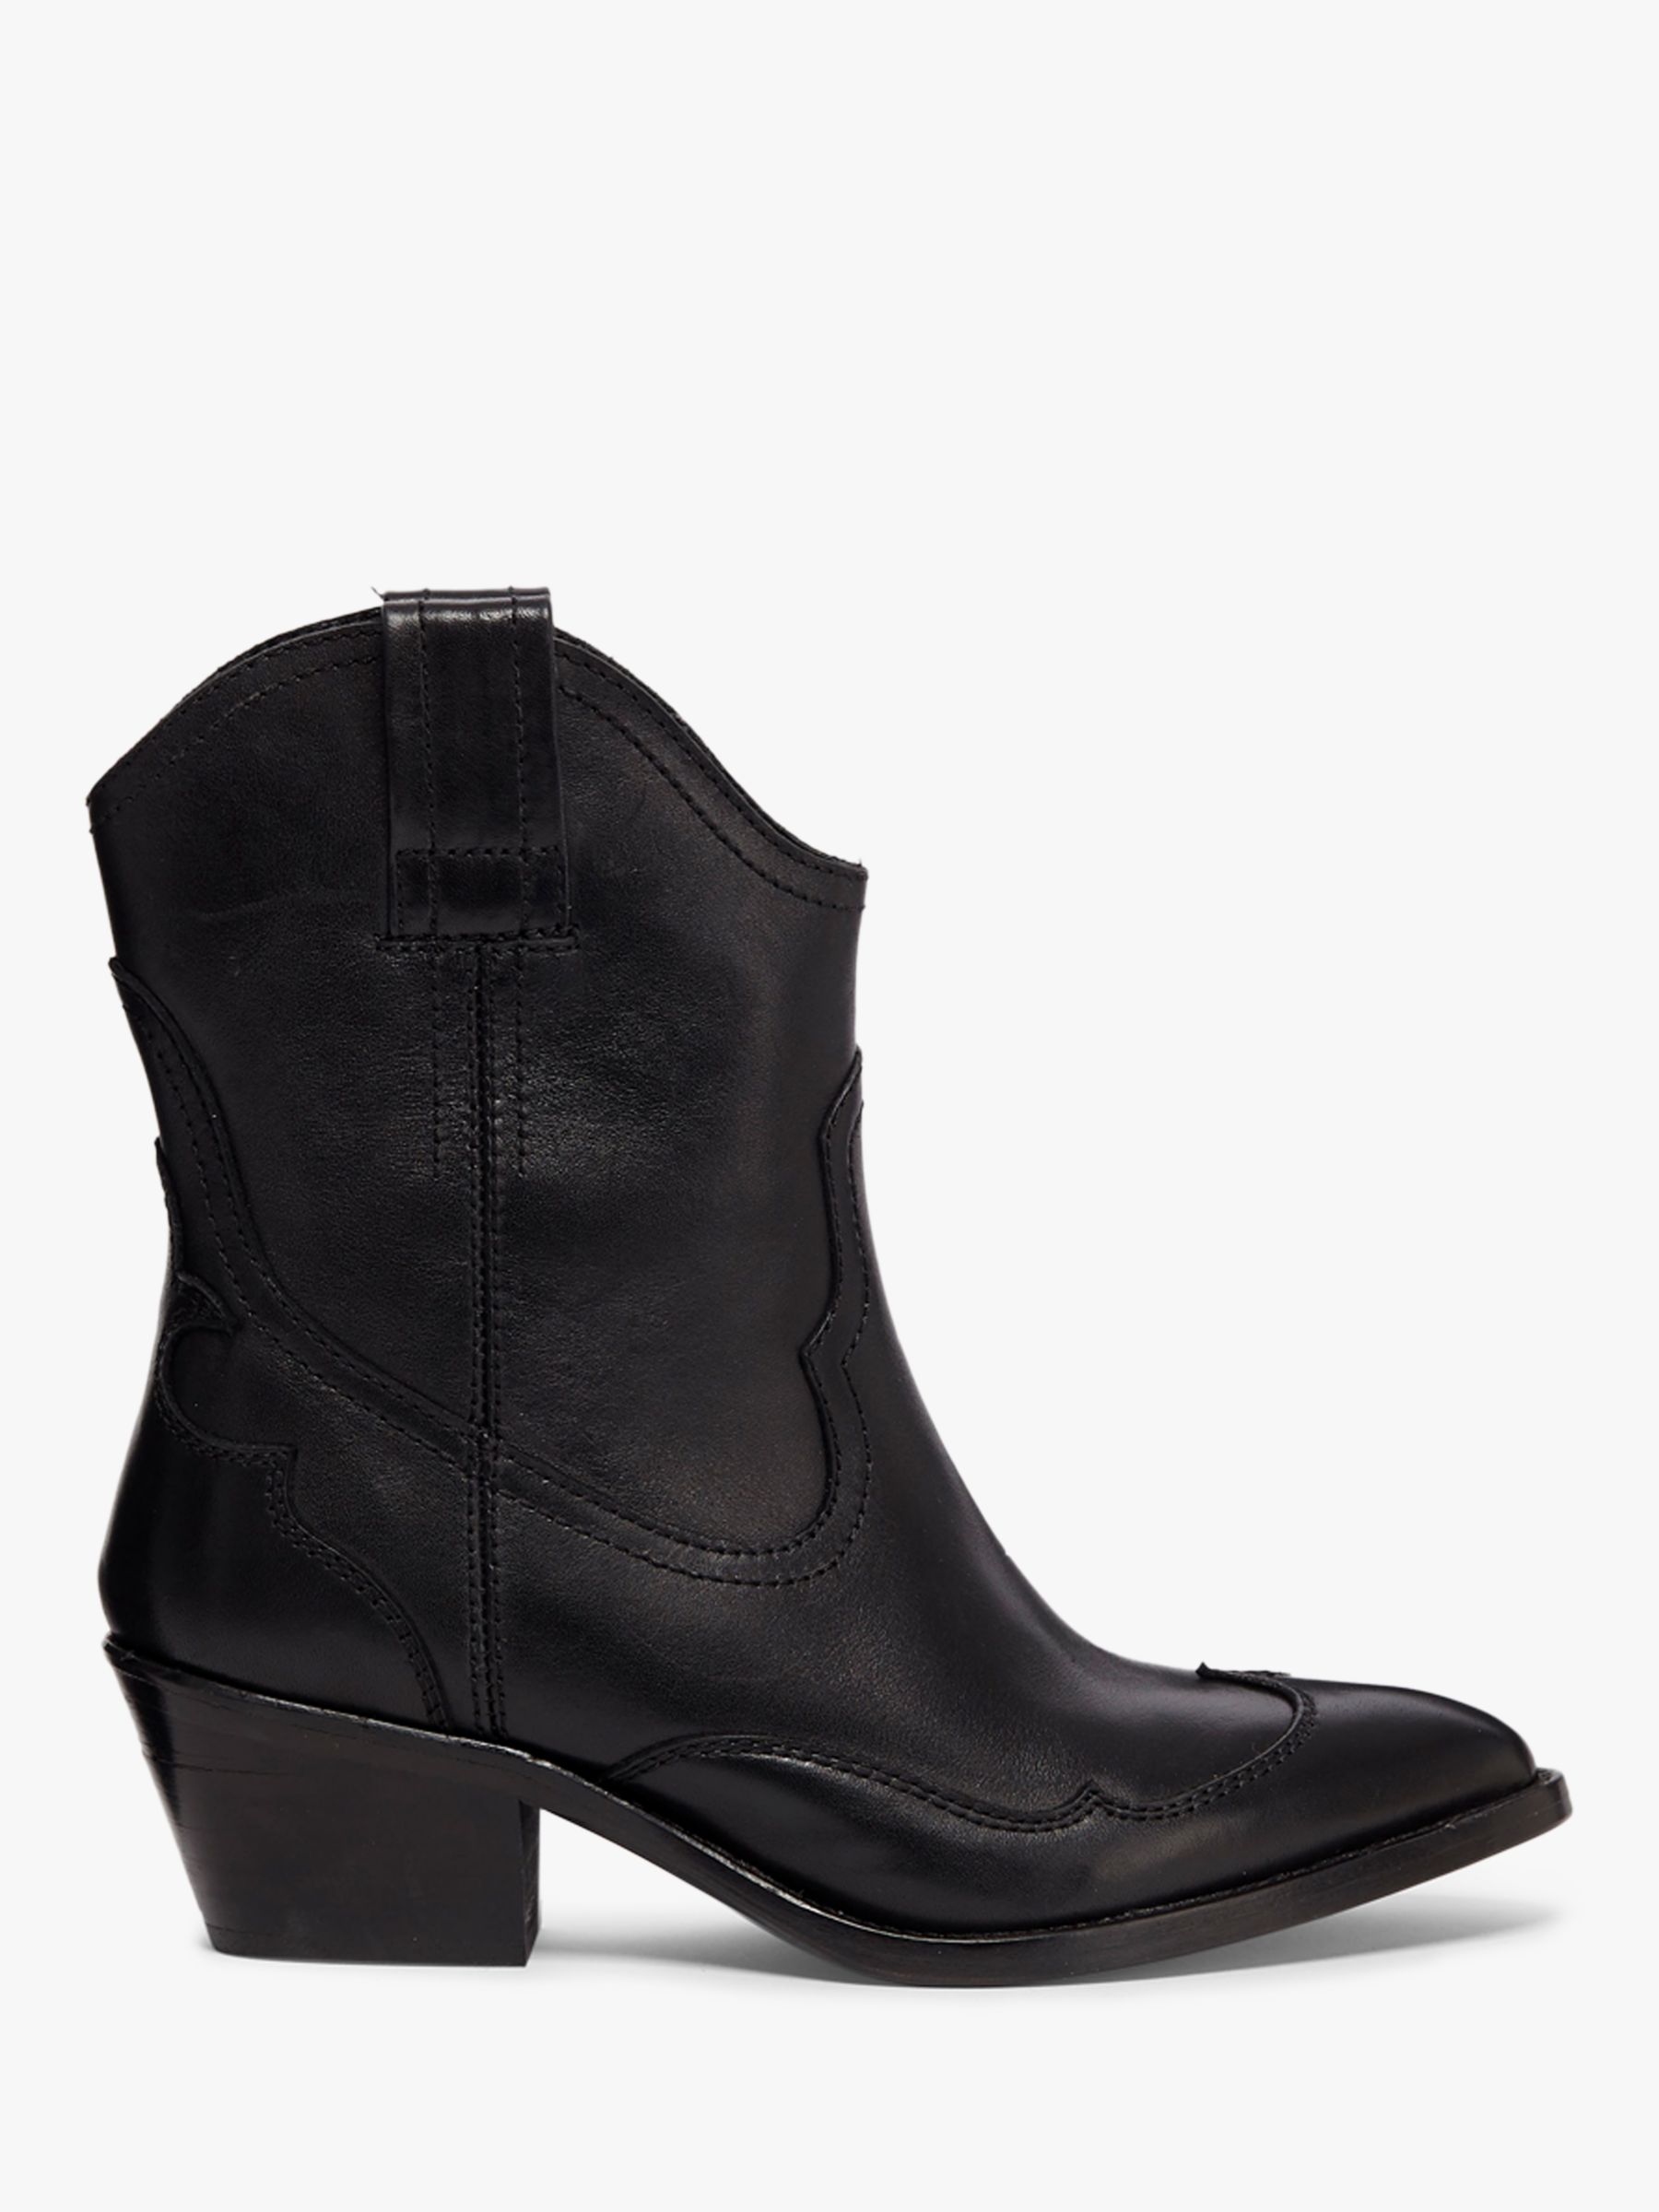 AllSaints Shira Western Leather Cowboy Boots, Black